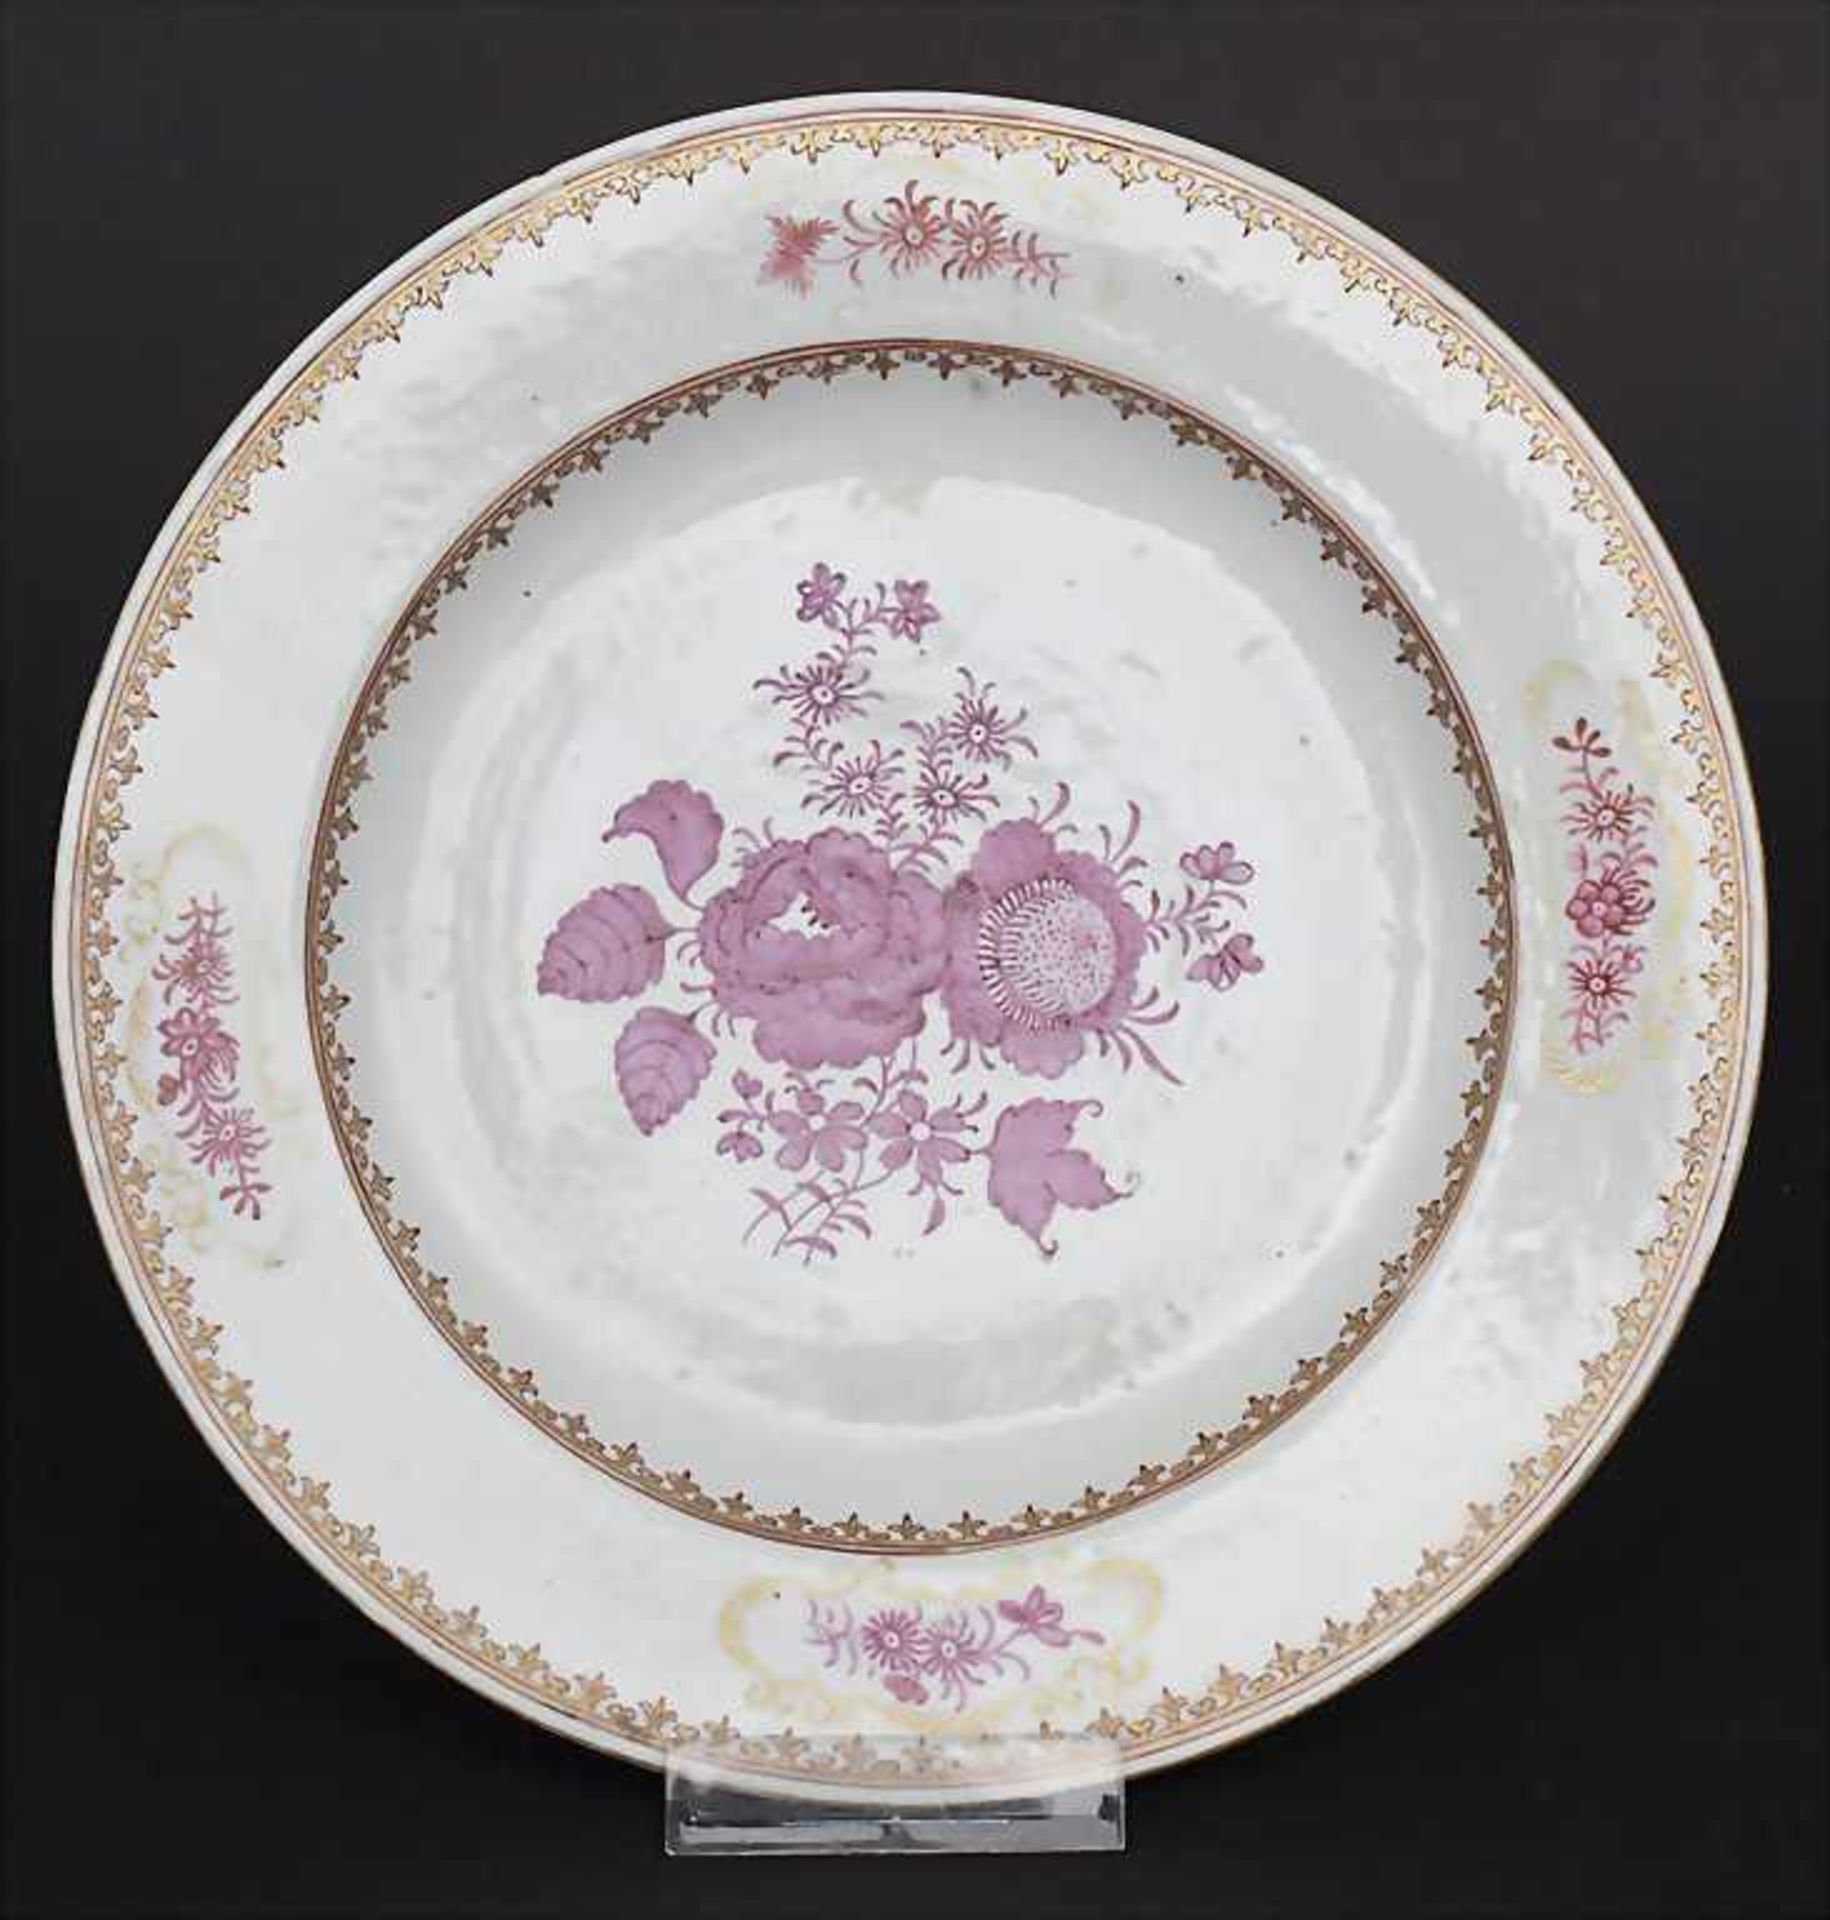 Porzellan-Teller mit Rosen- und Goldrankendekor / A porcelain plate with roses and gilt tendrils,